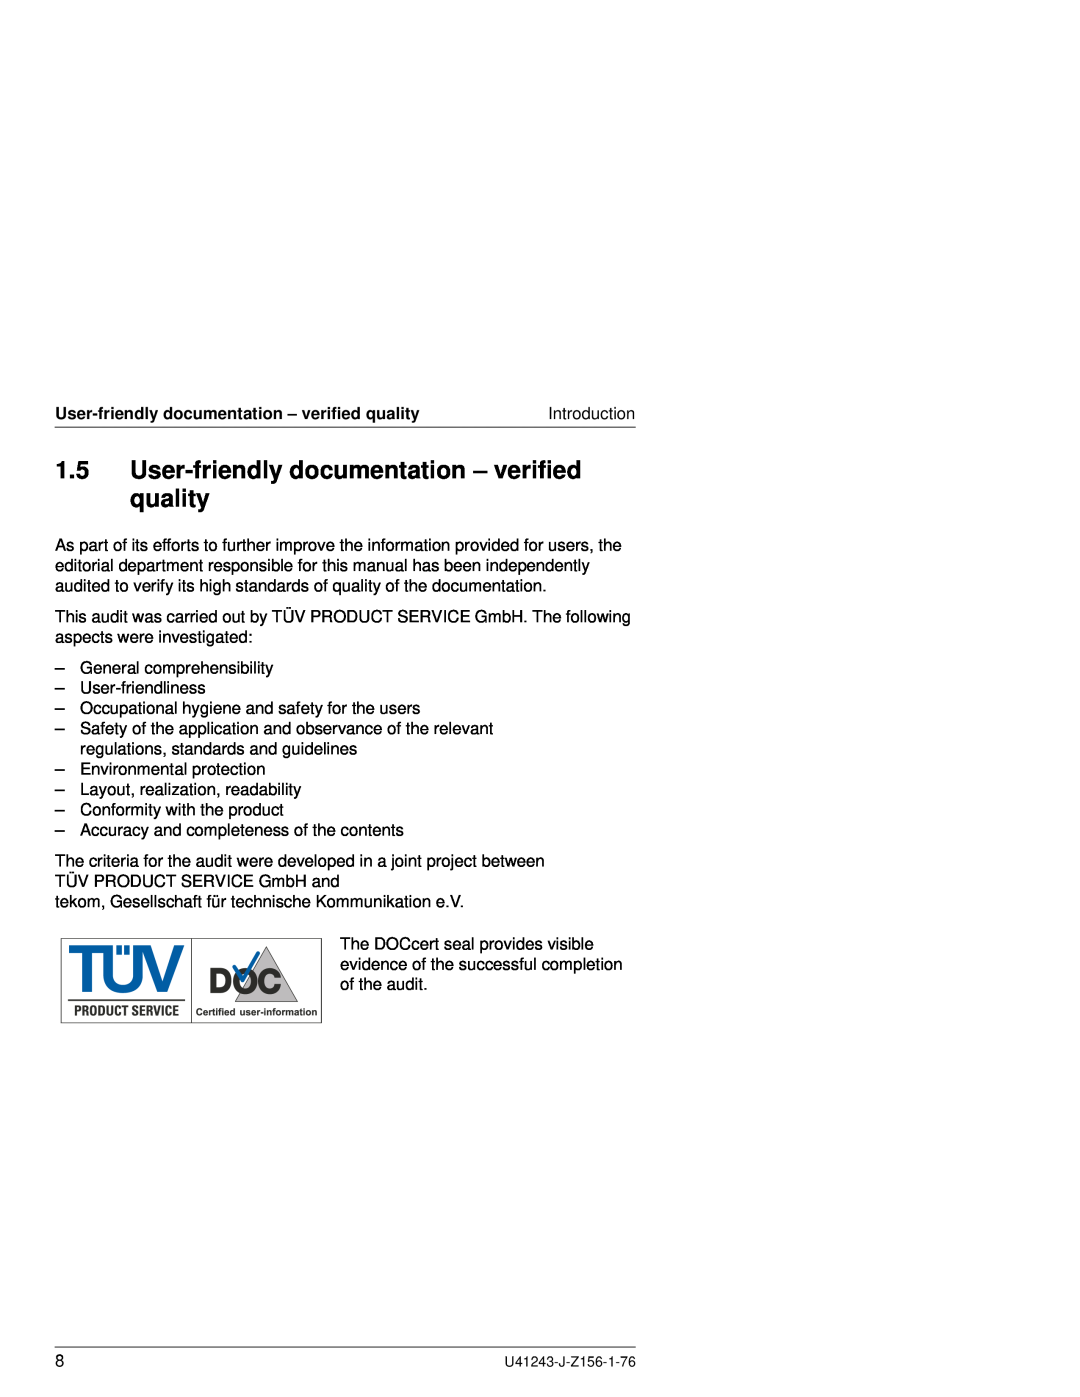 Fujitsu N800 manual User-friendly documentation - verified quality 